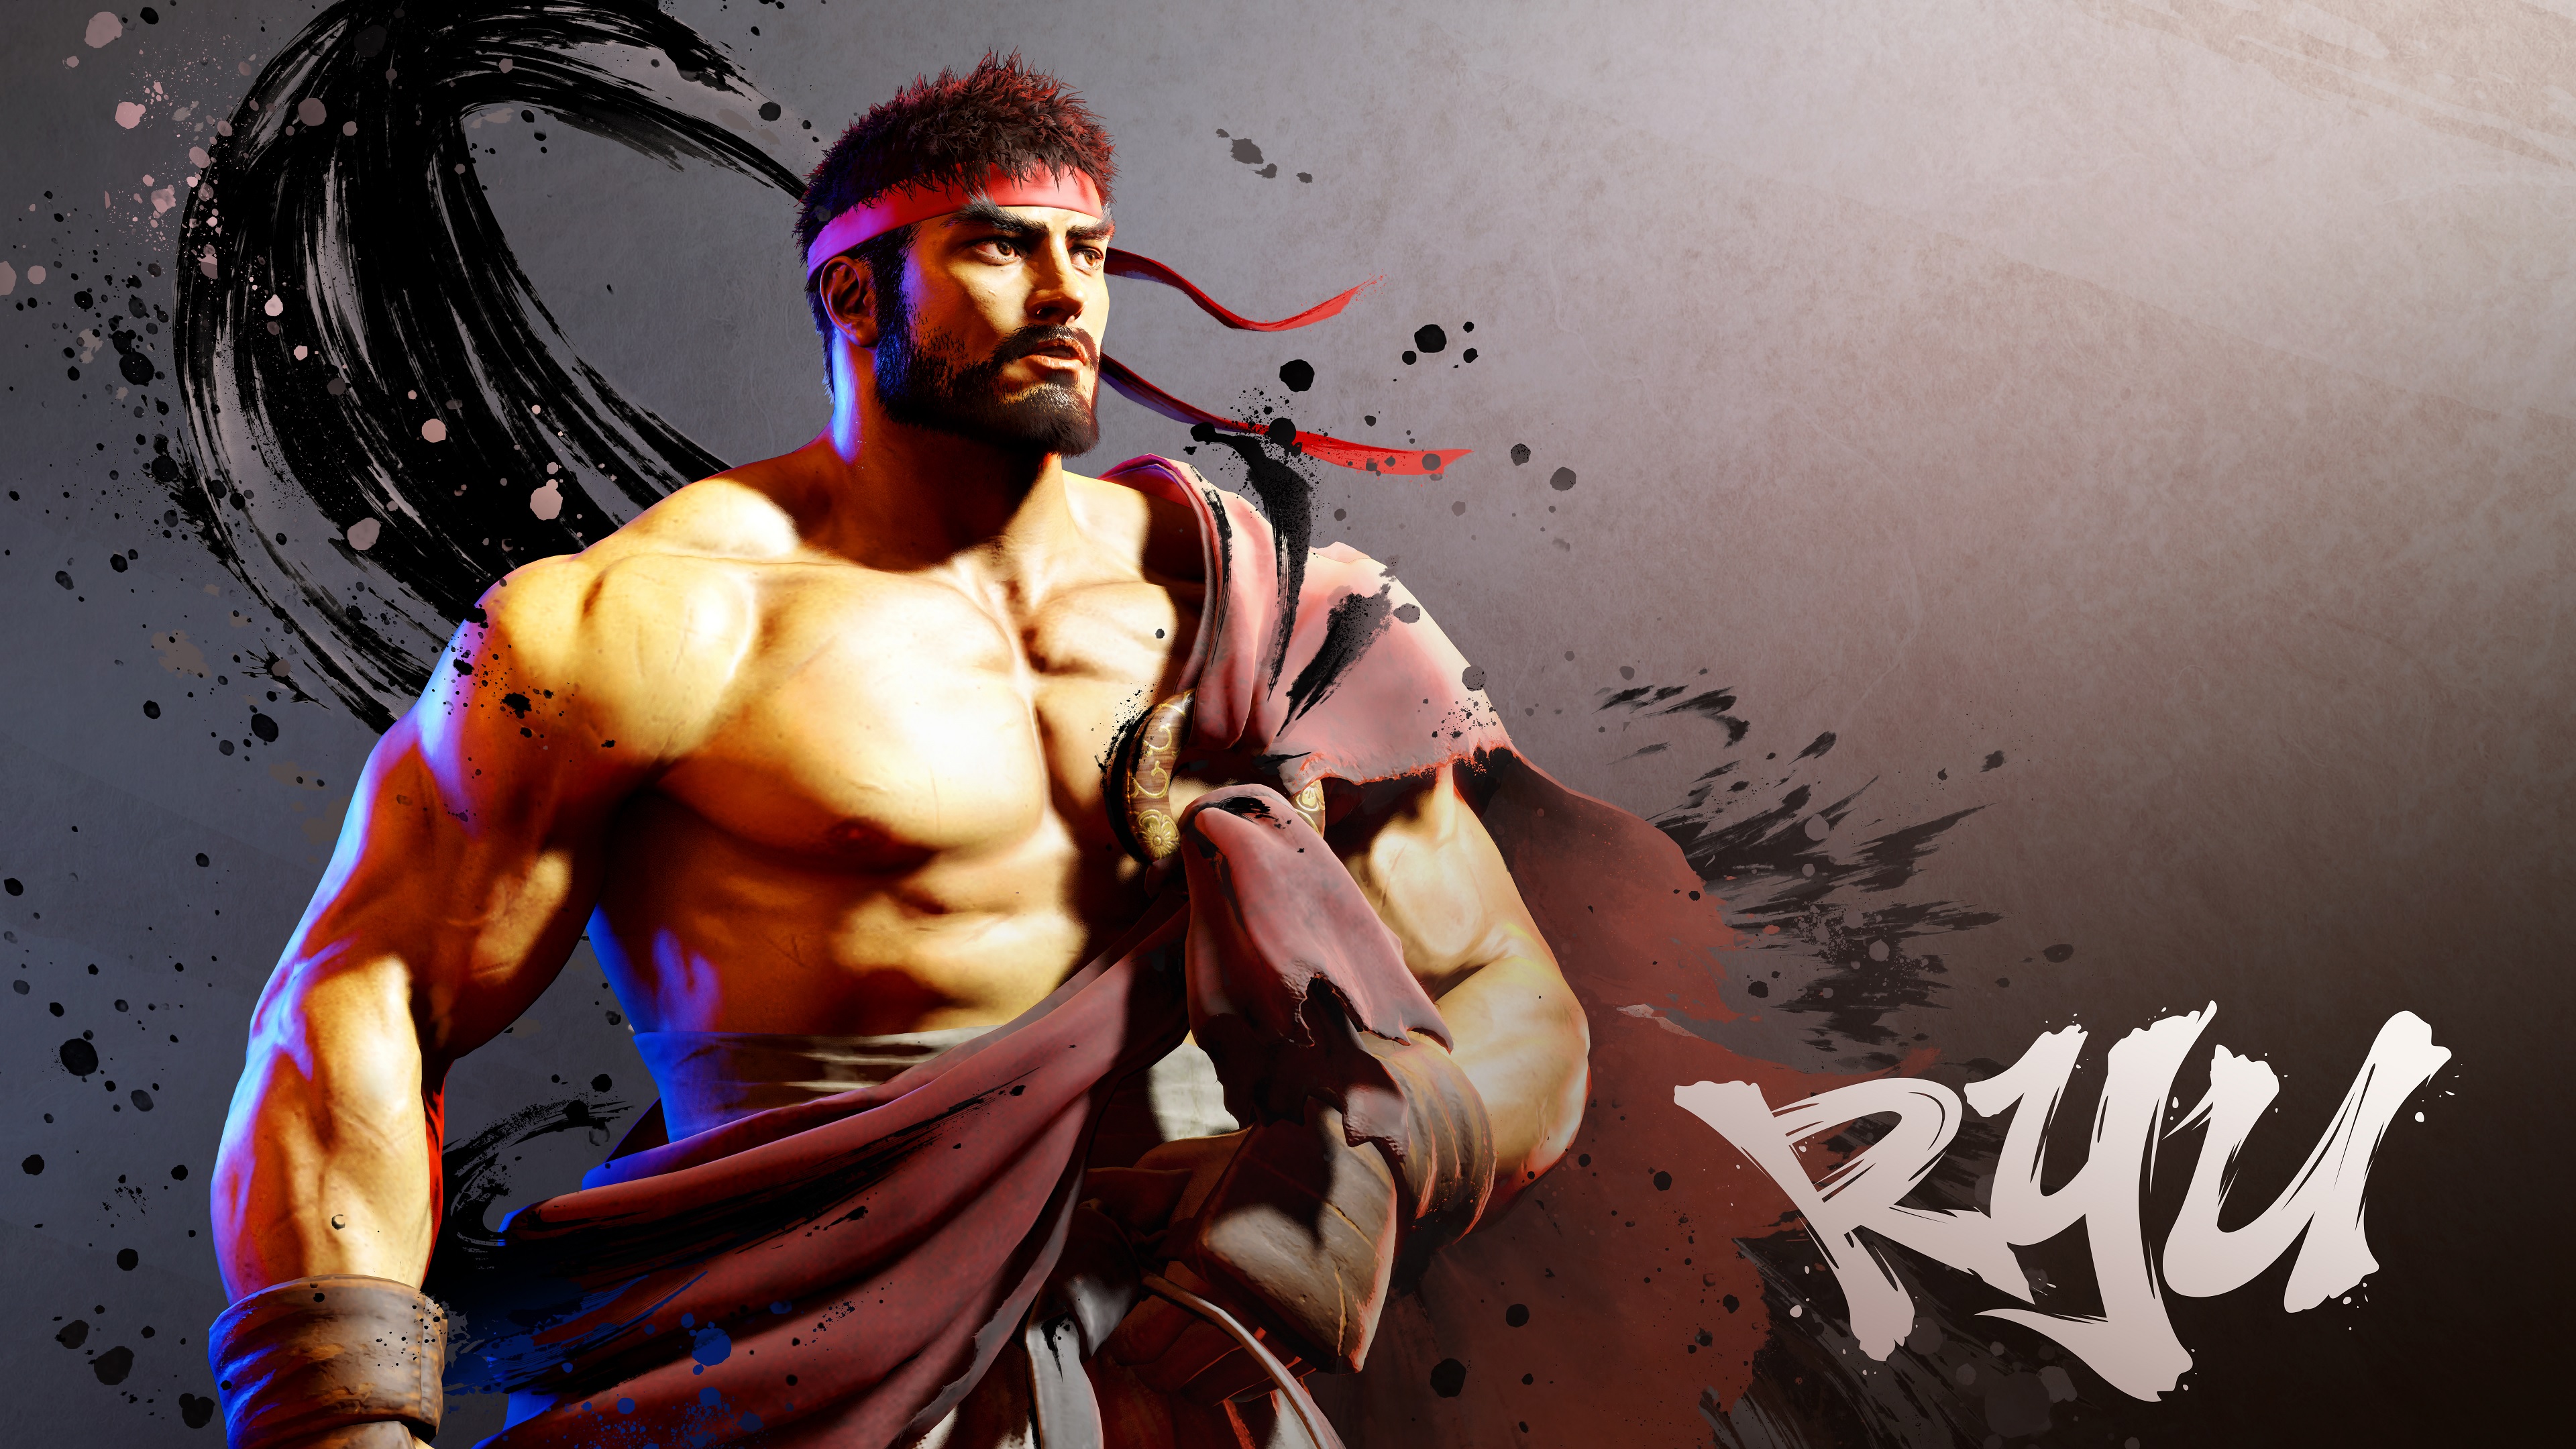 Wallpaper Street Fighter v Ryu Capcom Boxing Games Background   Download Free Image